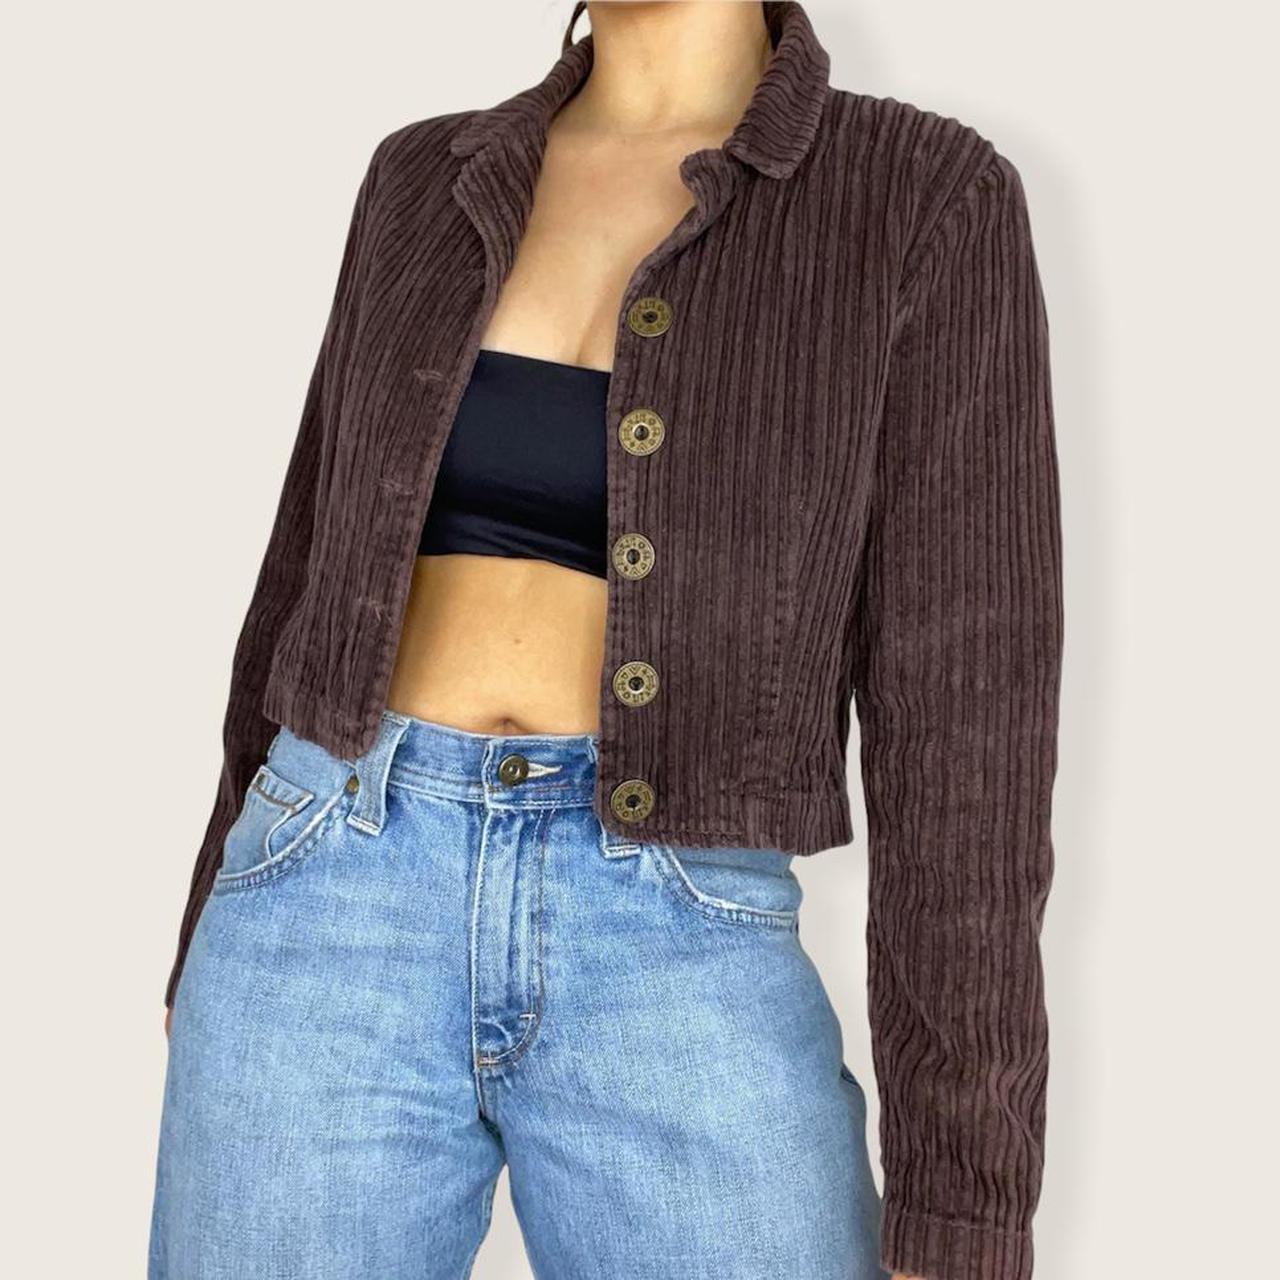 Product Image 1 - Brown boho jacket 🍃

Crop corduroy